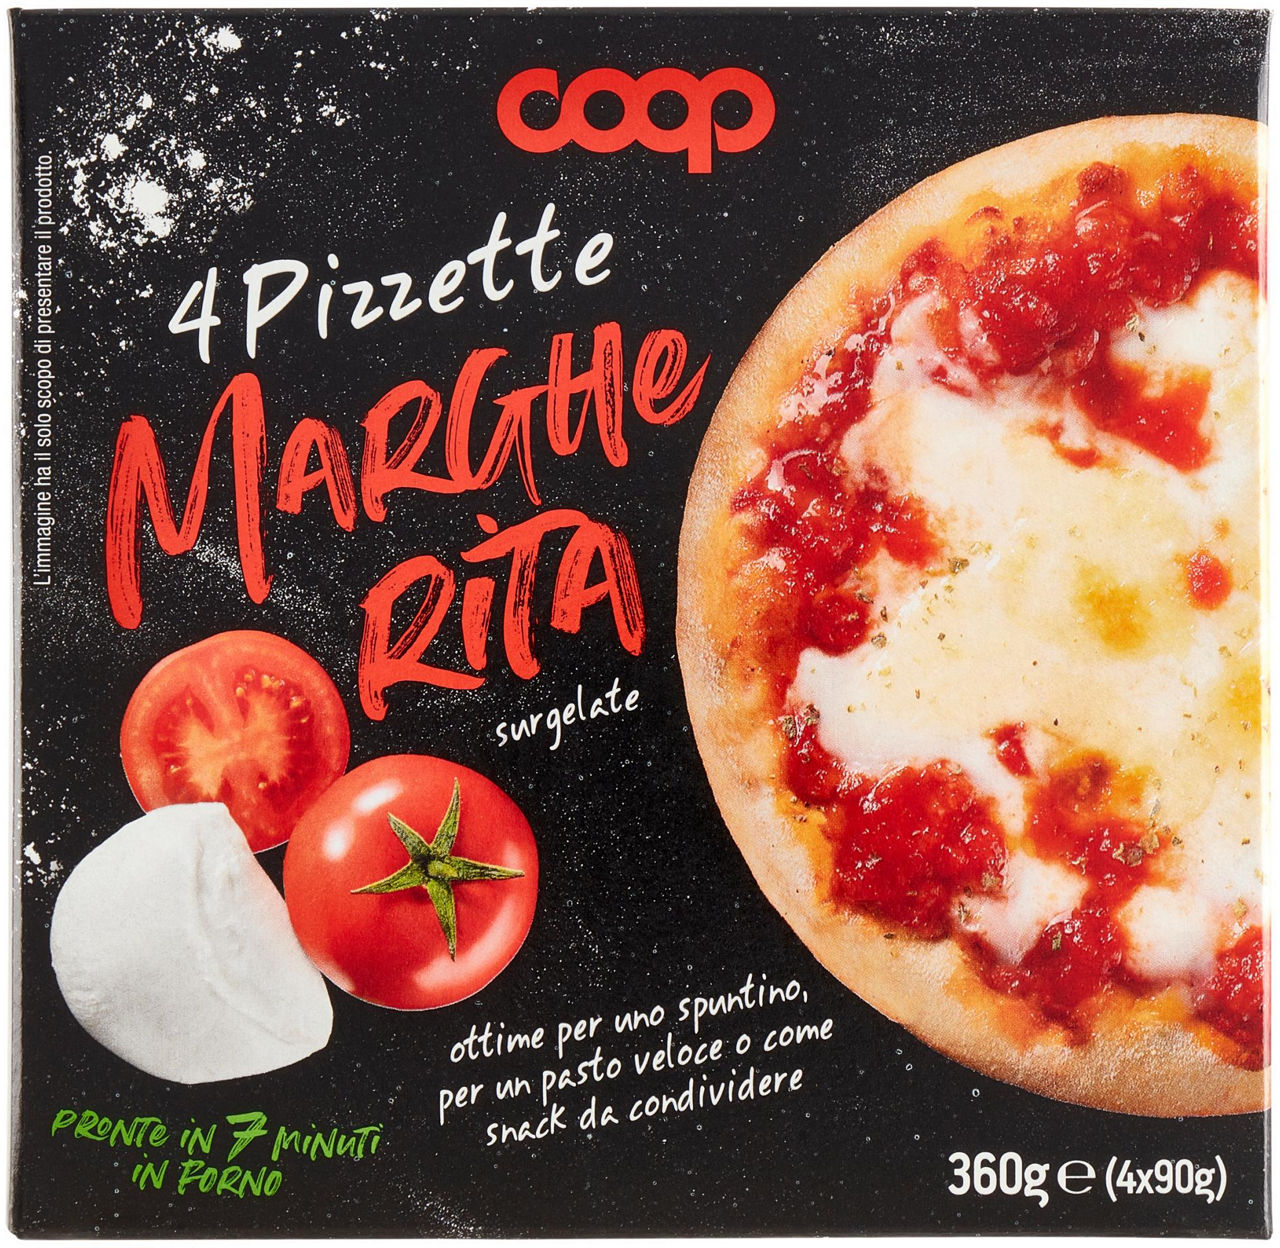 Pizzette margherita coop  4pz surg. g 360